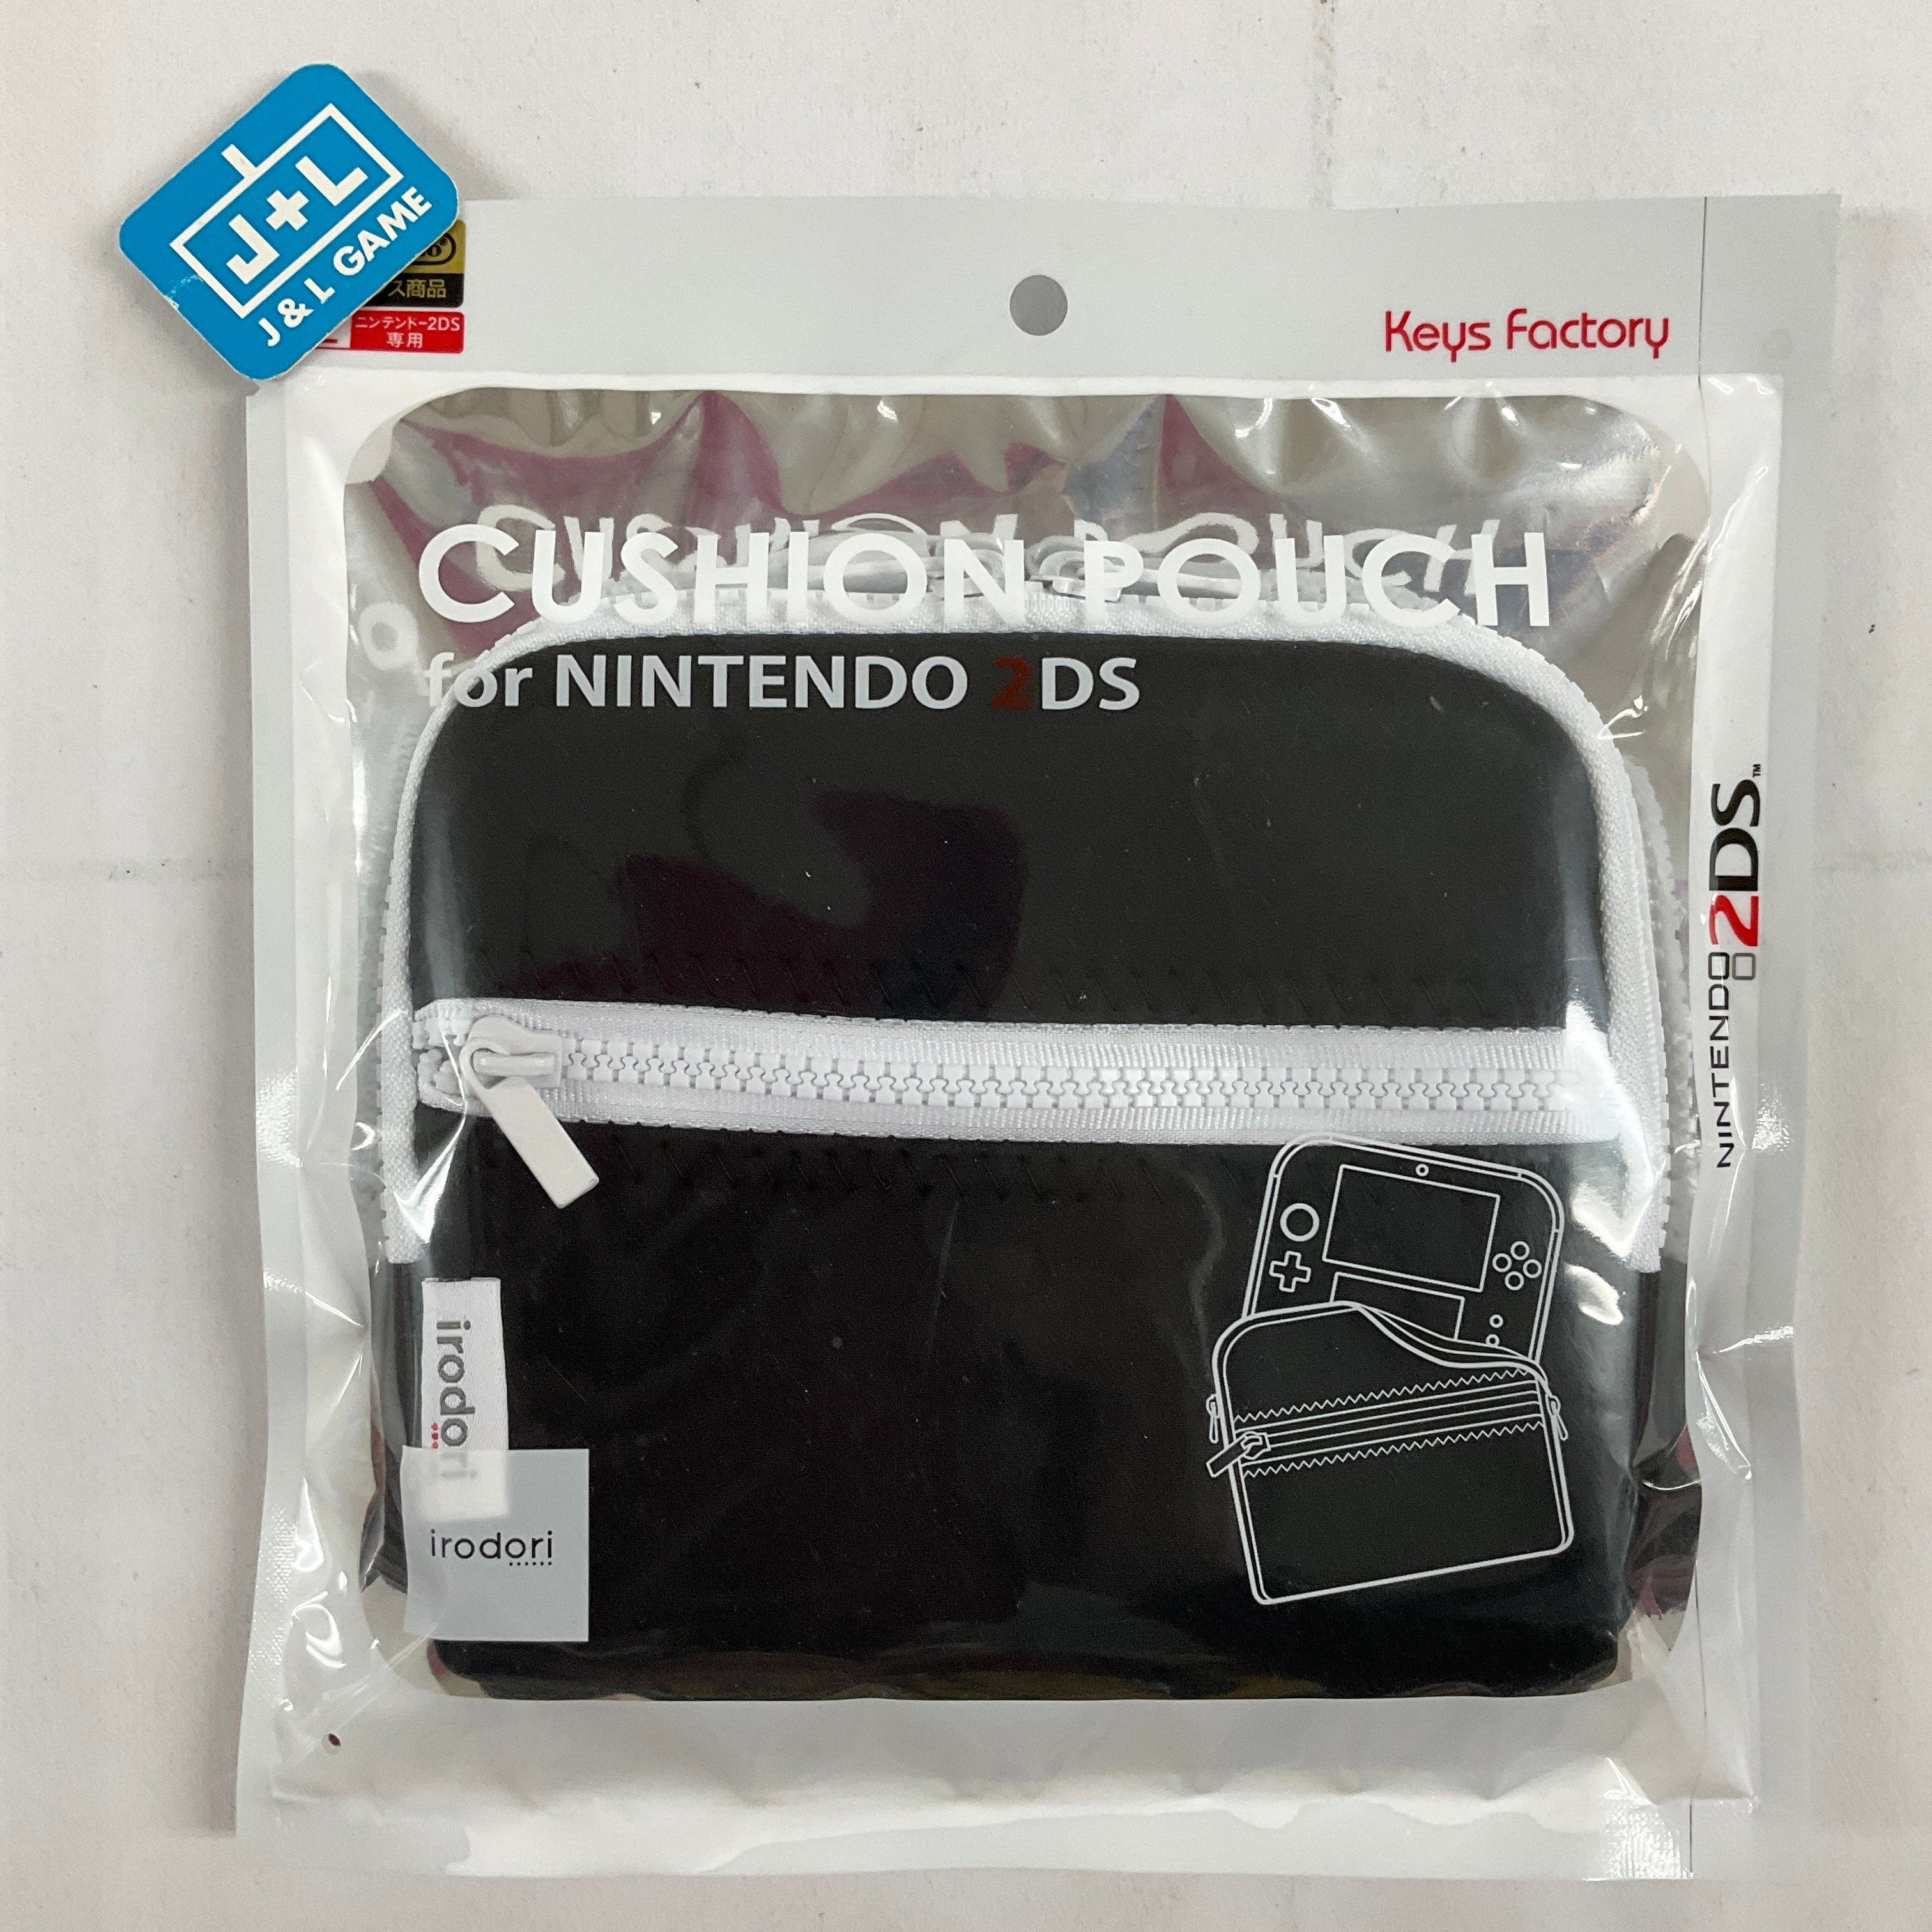 Keys Factory Nintendo 2DS Cushion Pouch (Black) - Nintendo 3DS Accessories Keys Factory   